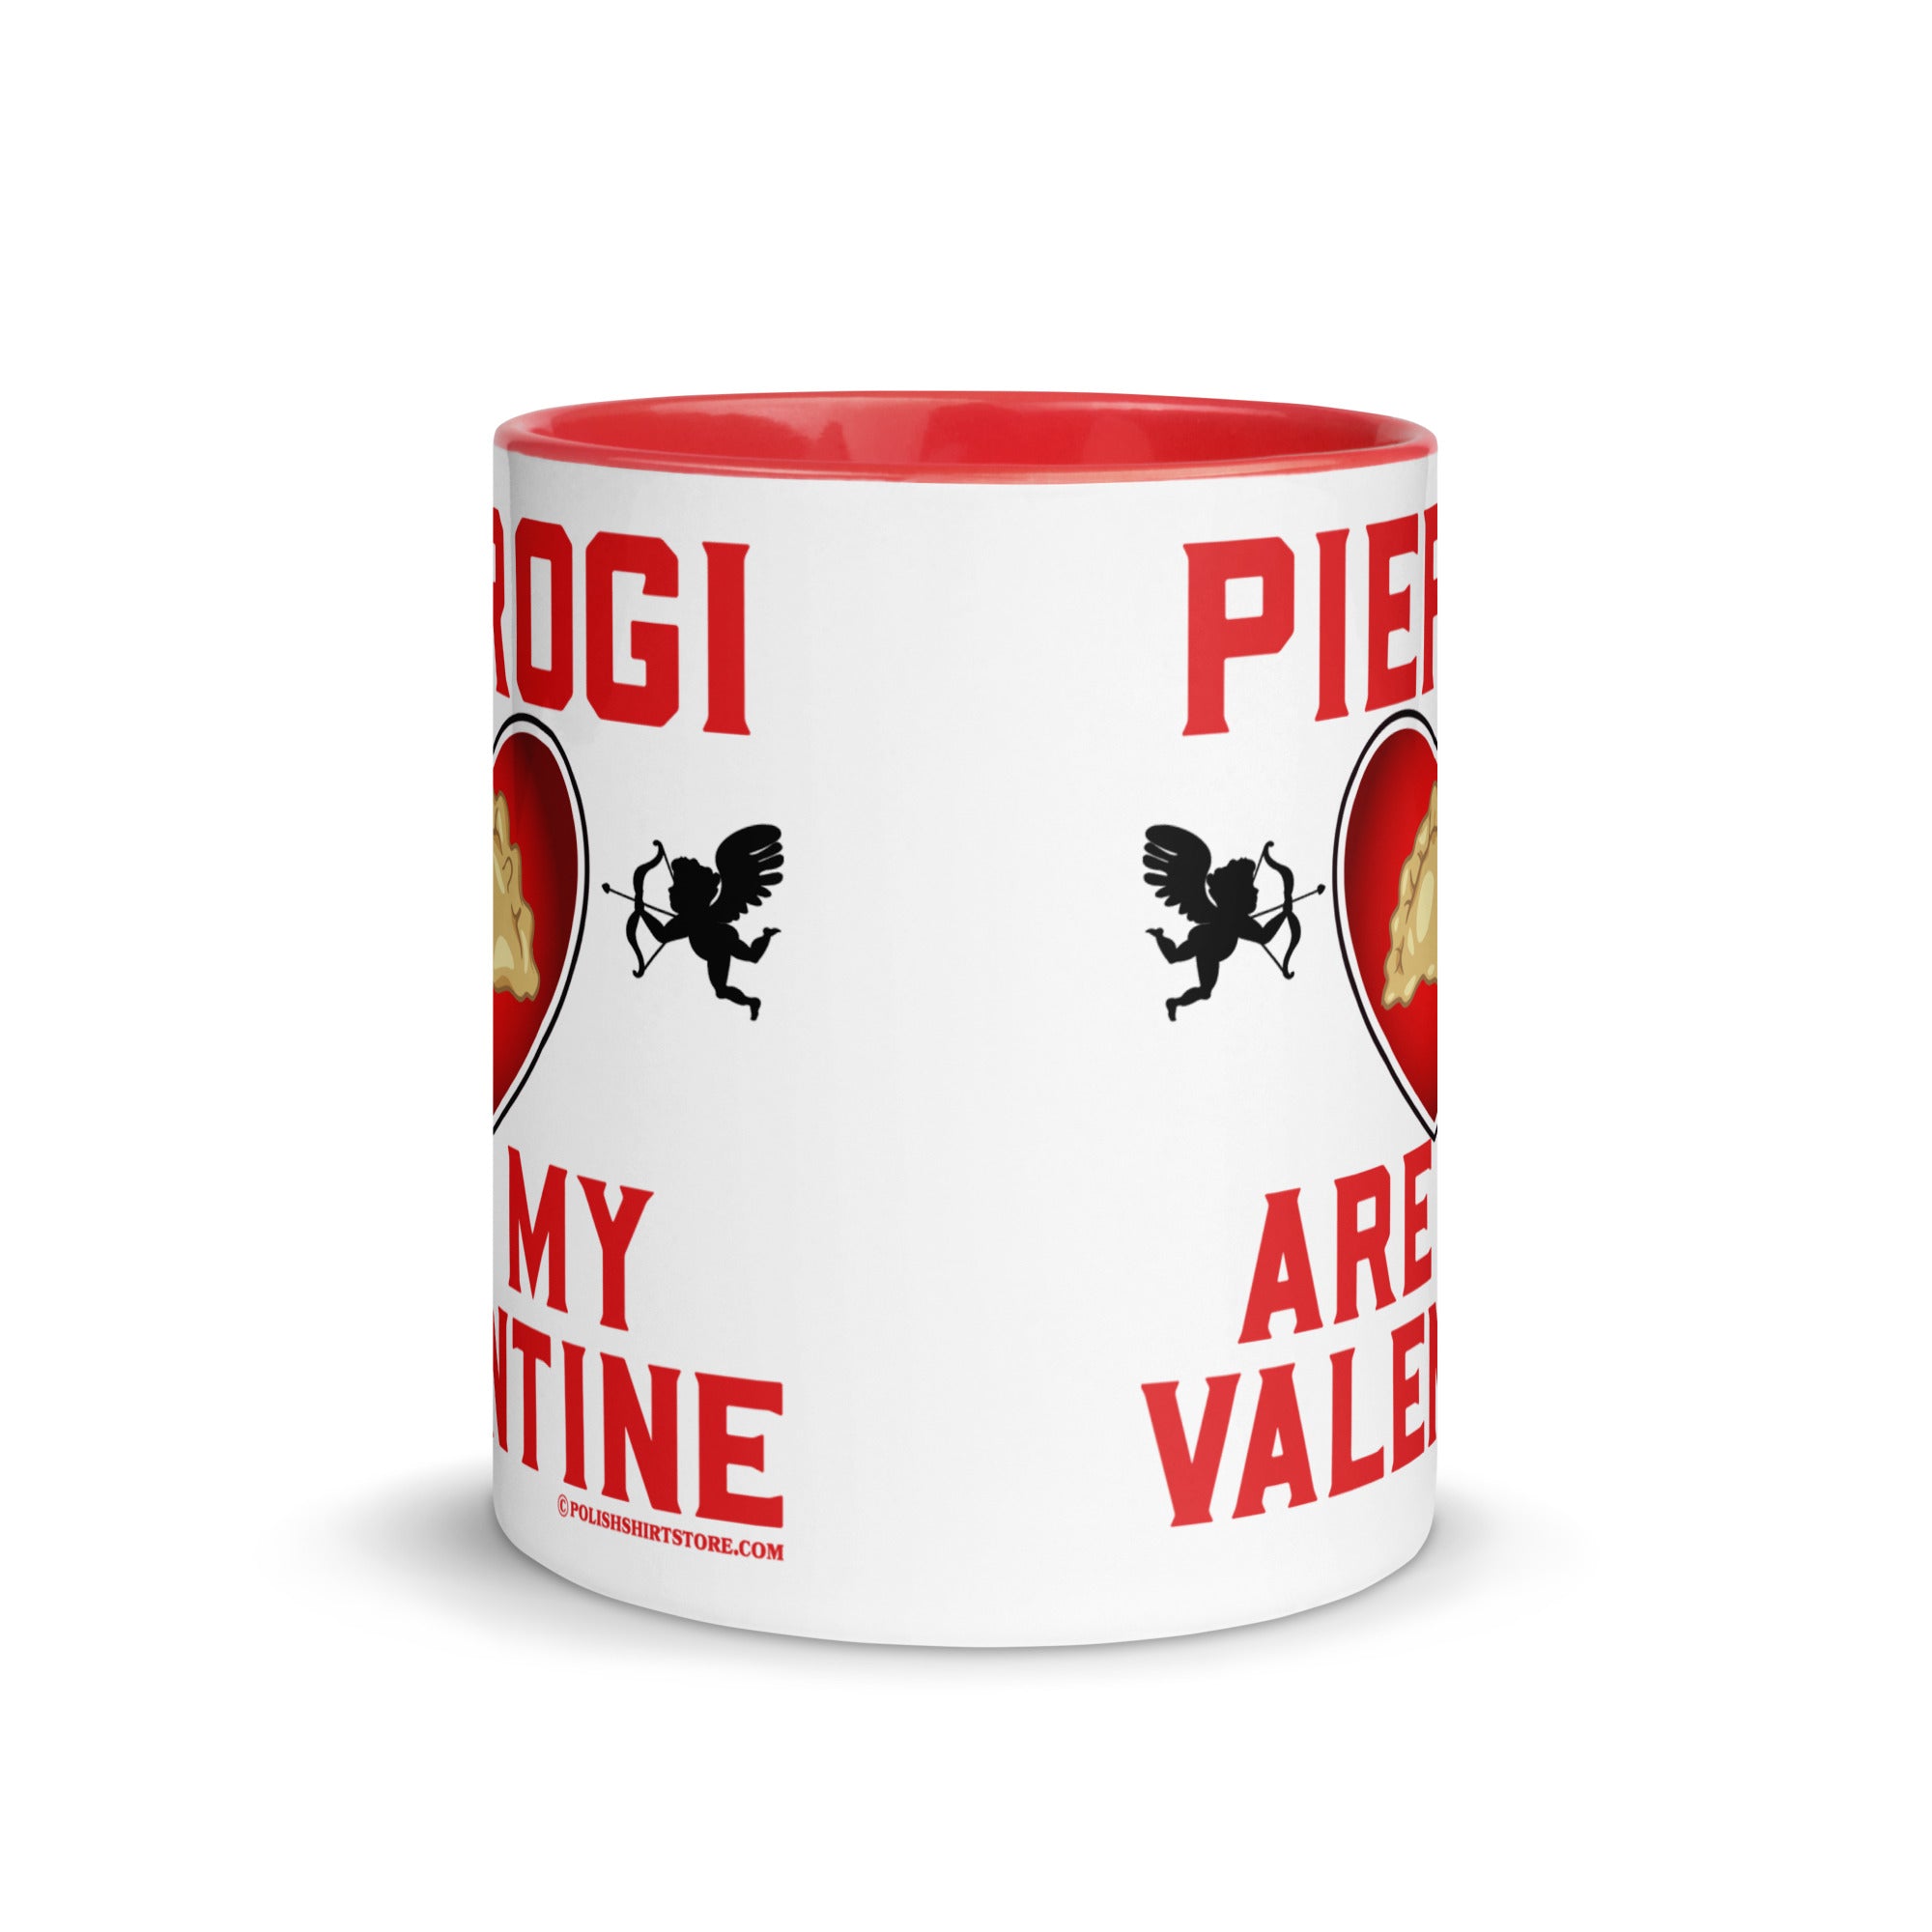 Pierogi Are My Valentine Coffee Mug with Color Inside  Polish Shirt Store   